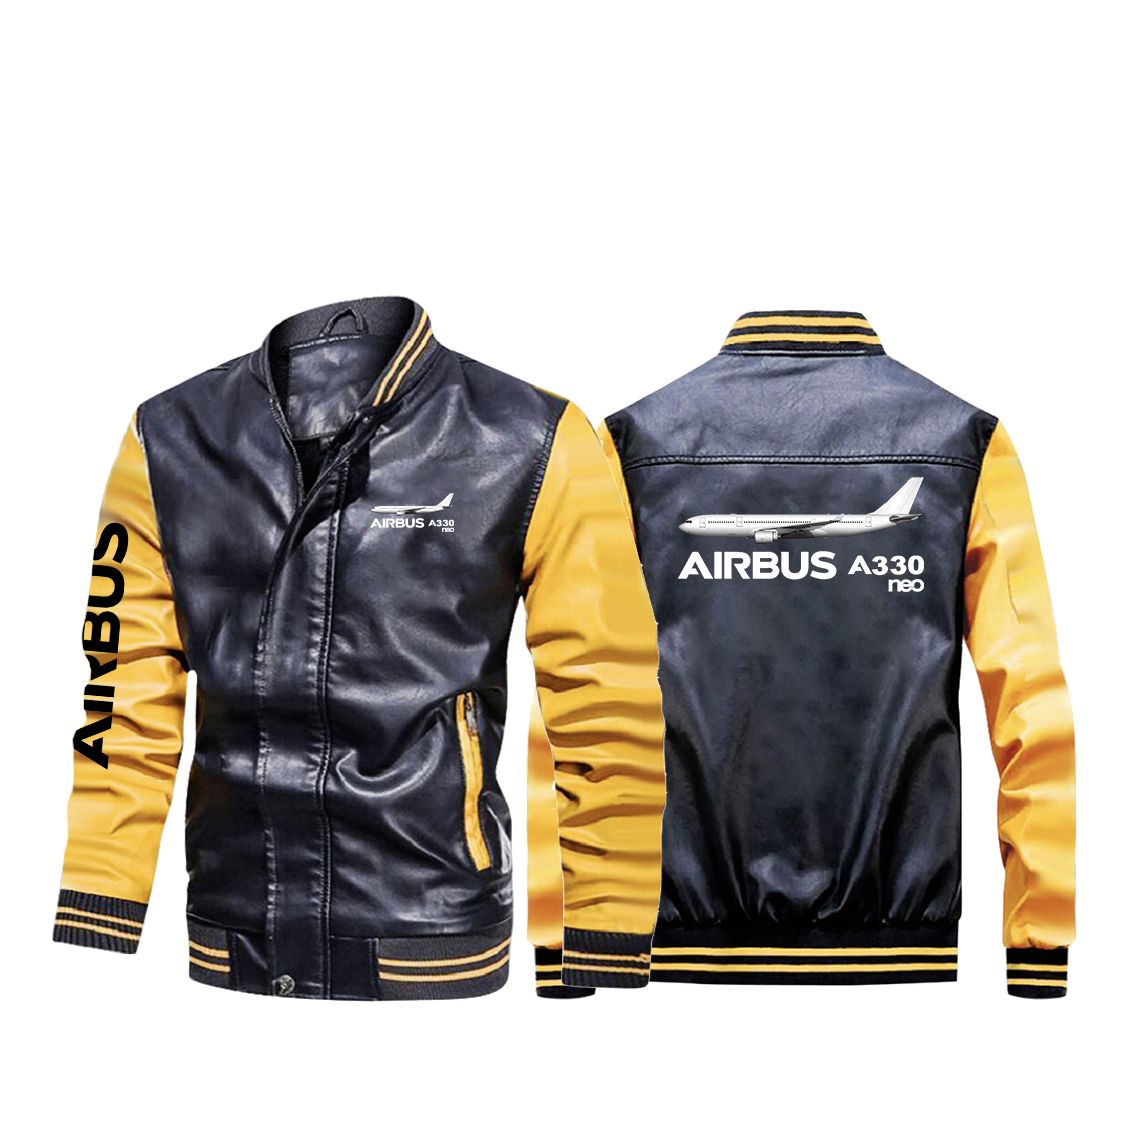 The Airbus A330neo Designed Stylish Leather Bomber Jackets